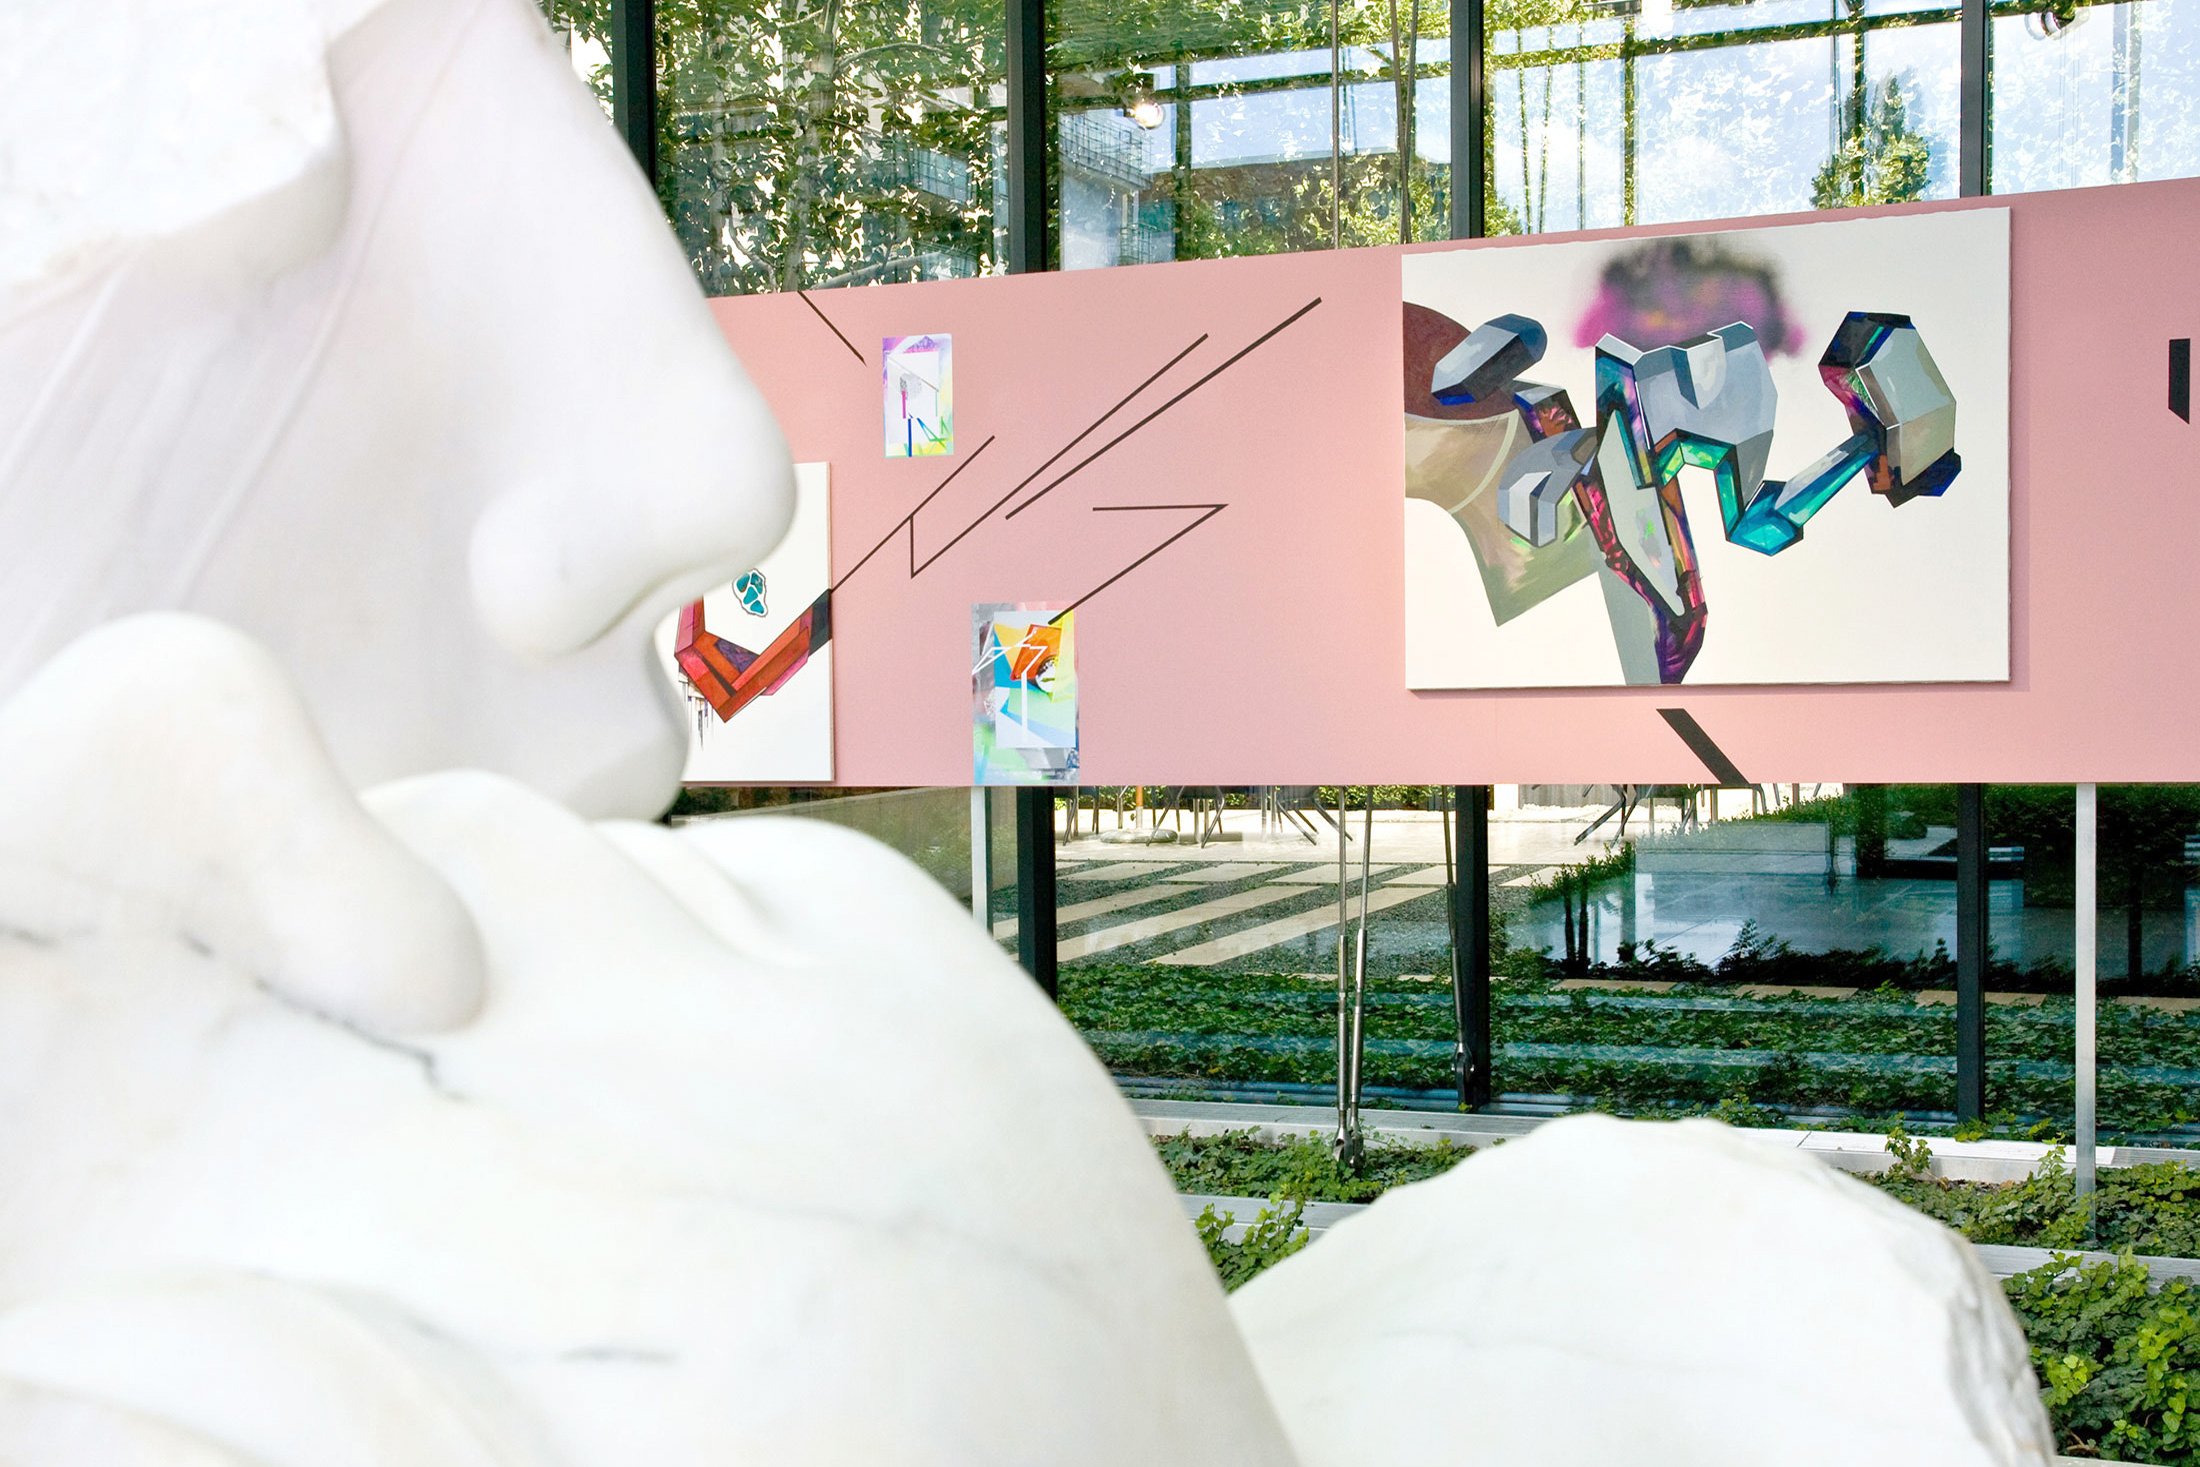 Ewa Doroszenko - Future sex based on Parade amoureuse by Francis Picabia - painting installation, Starak Family Foundation